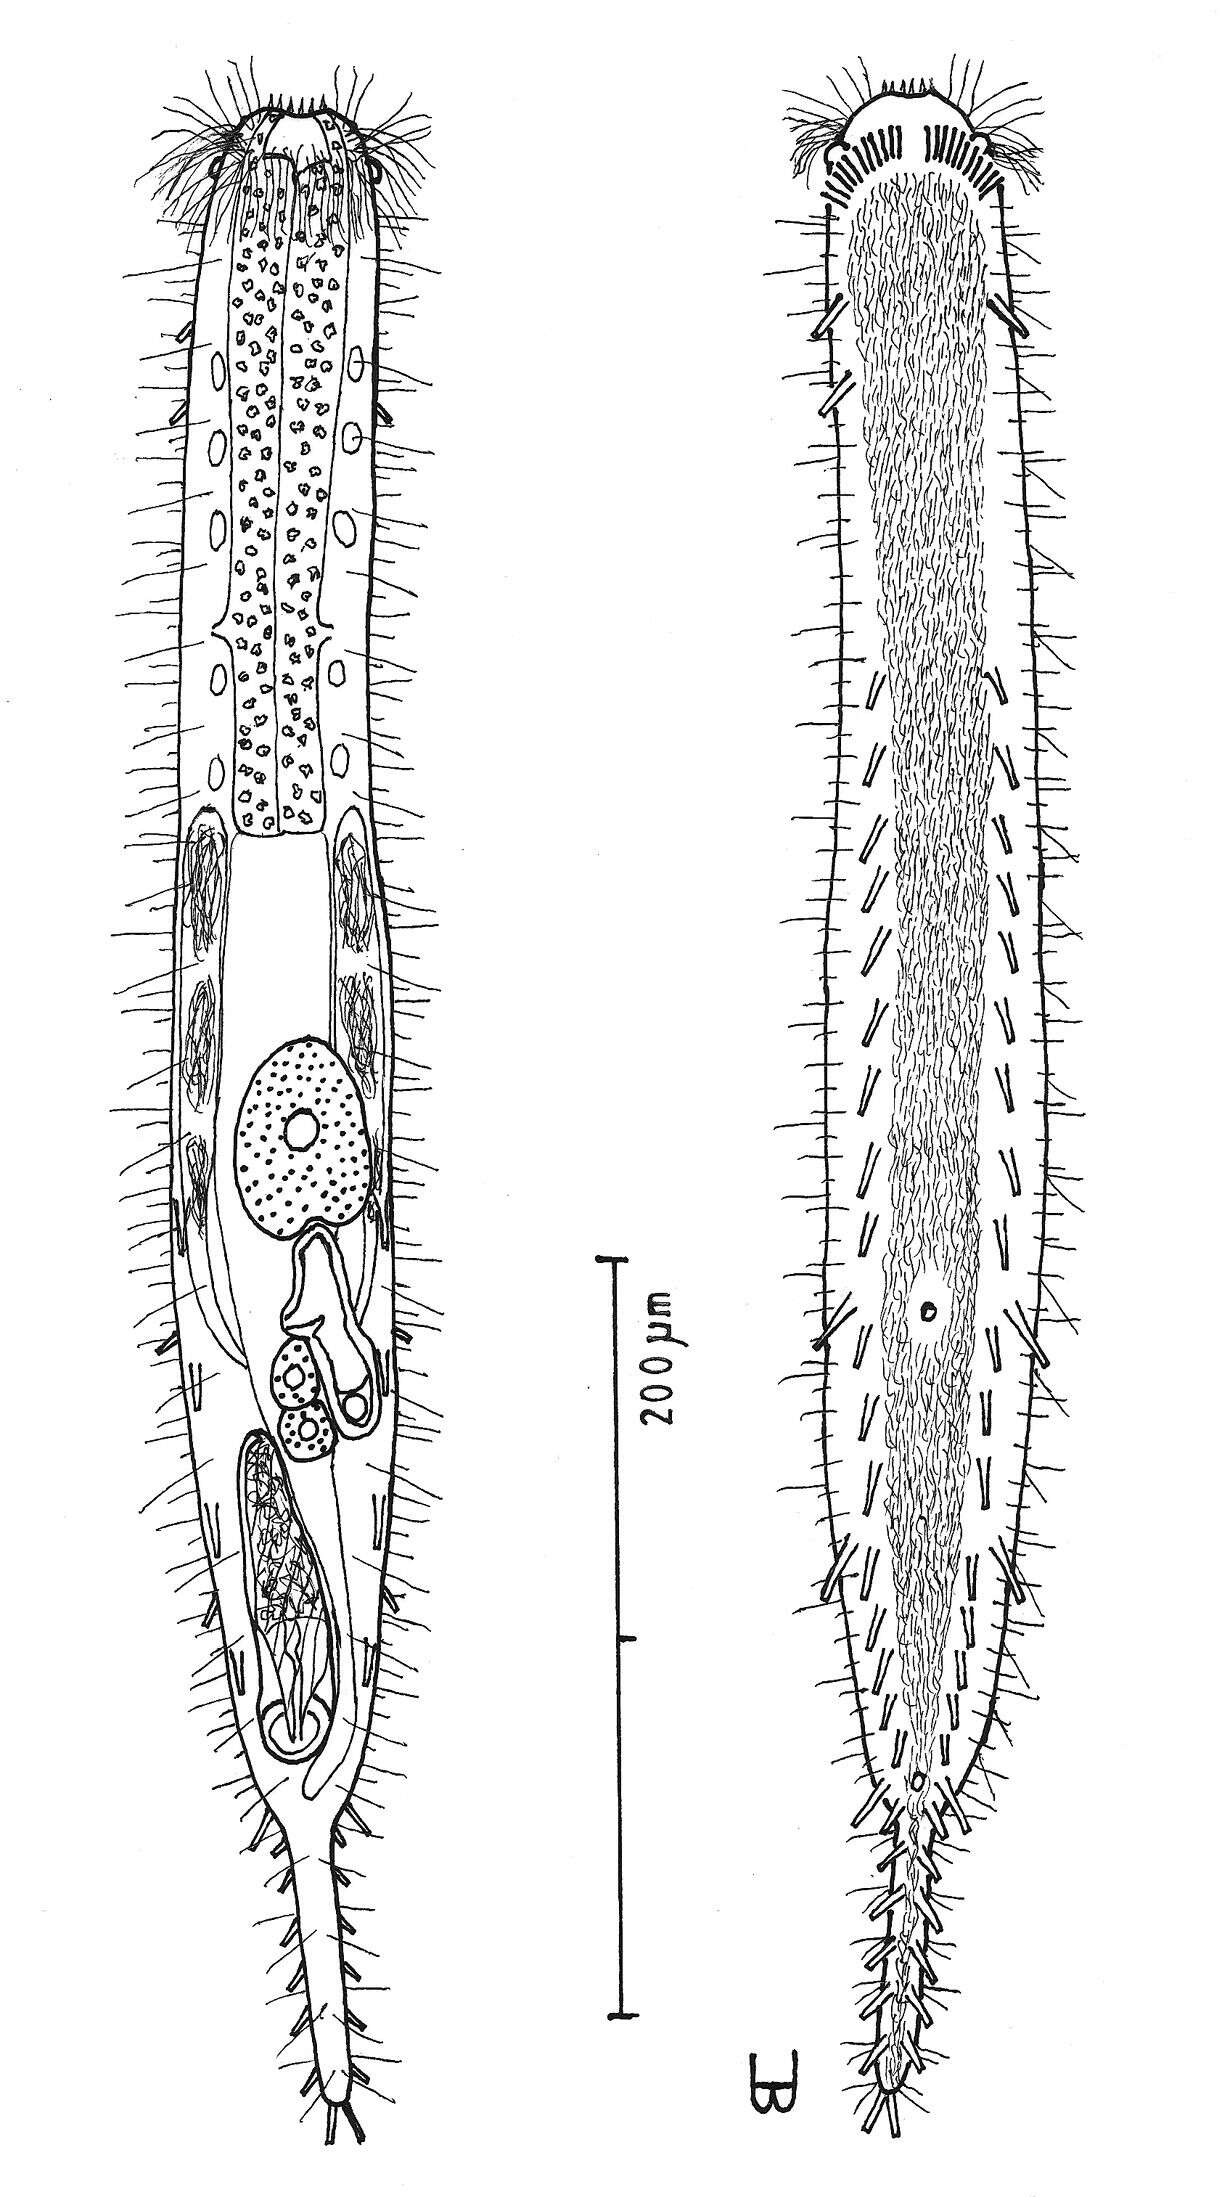 Image of Macrodasyidae